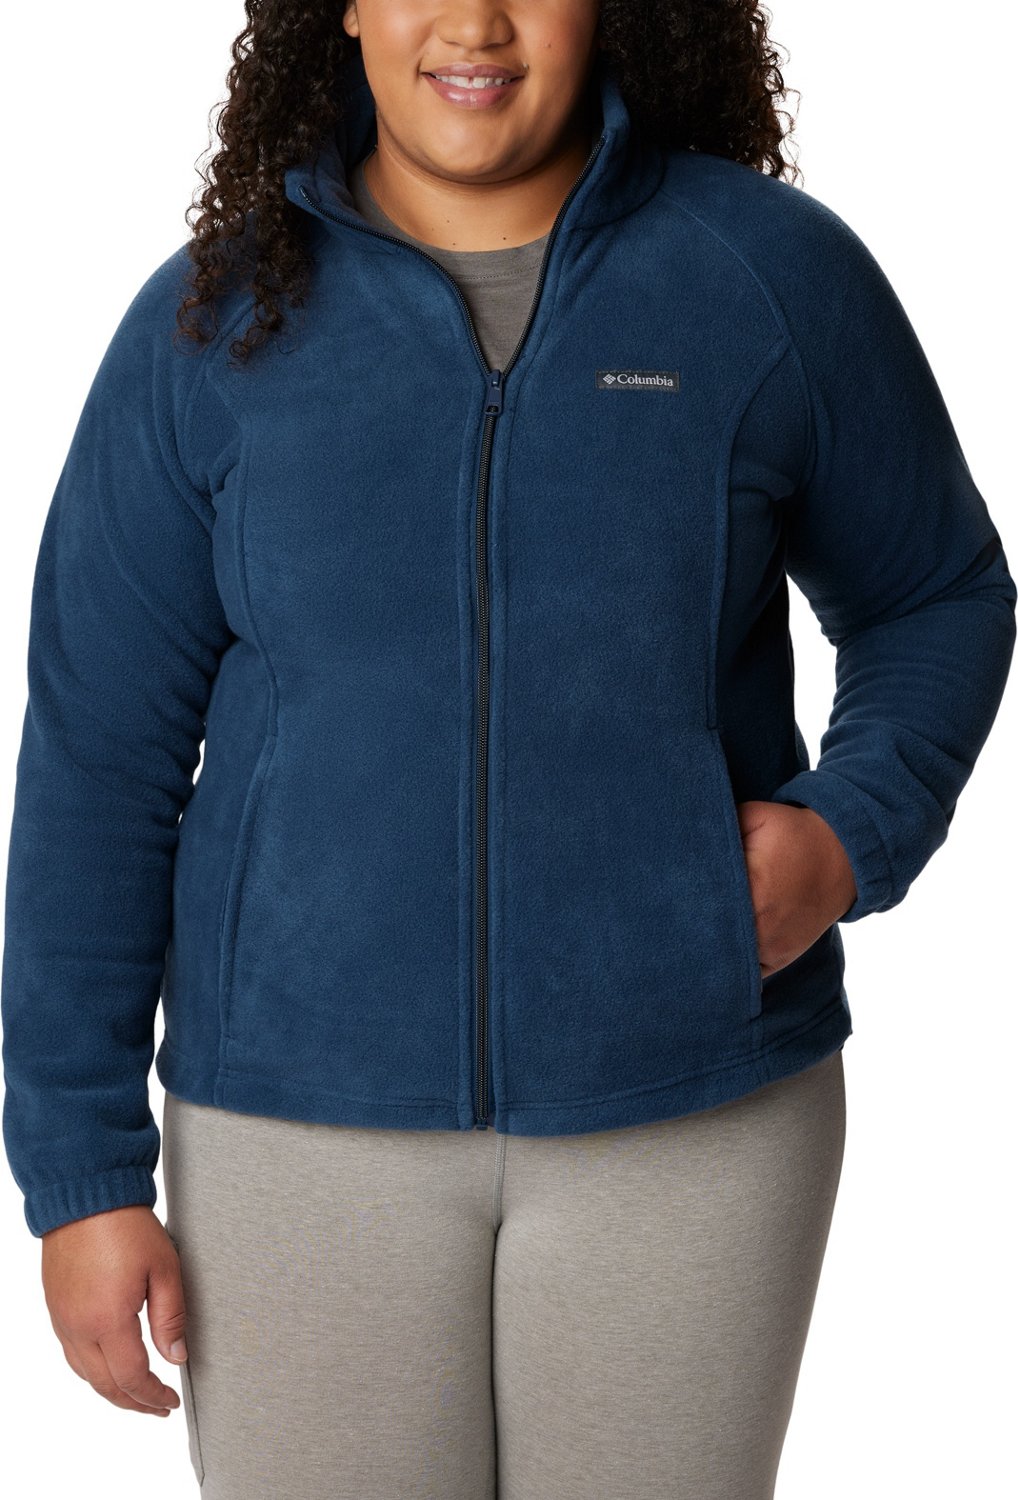 Columbia Sportswear Womens Benton Spring Plus Size Fleece Jacket